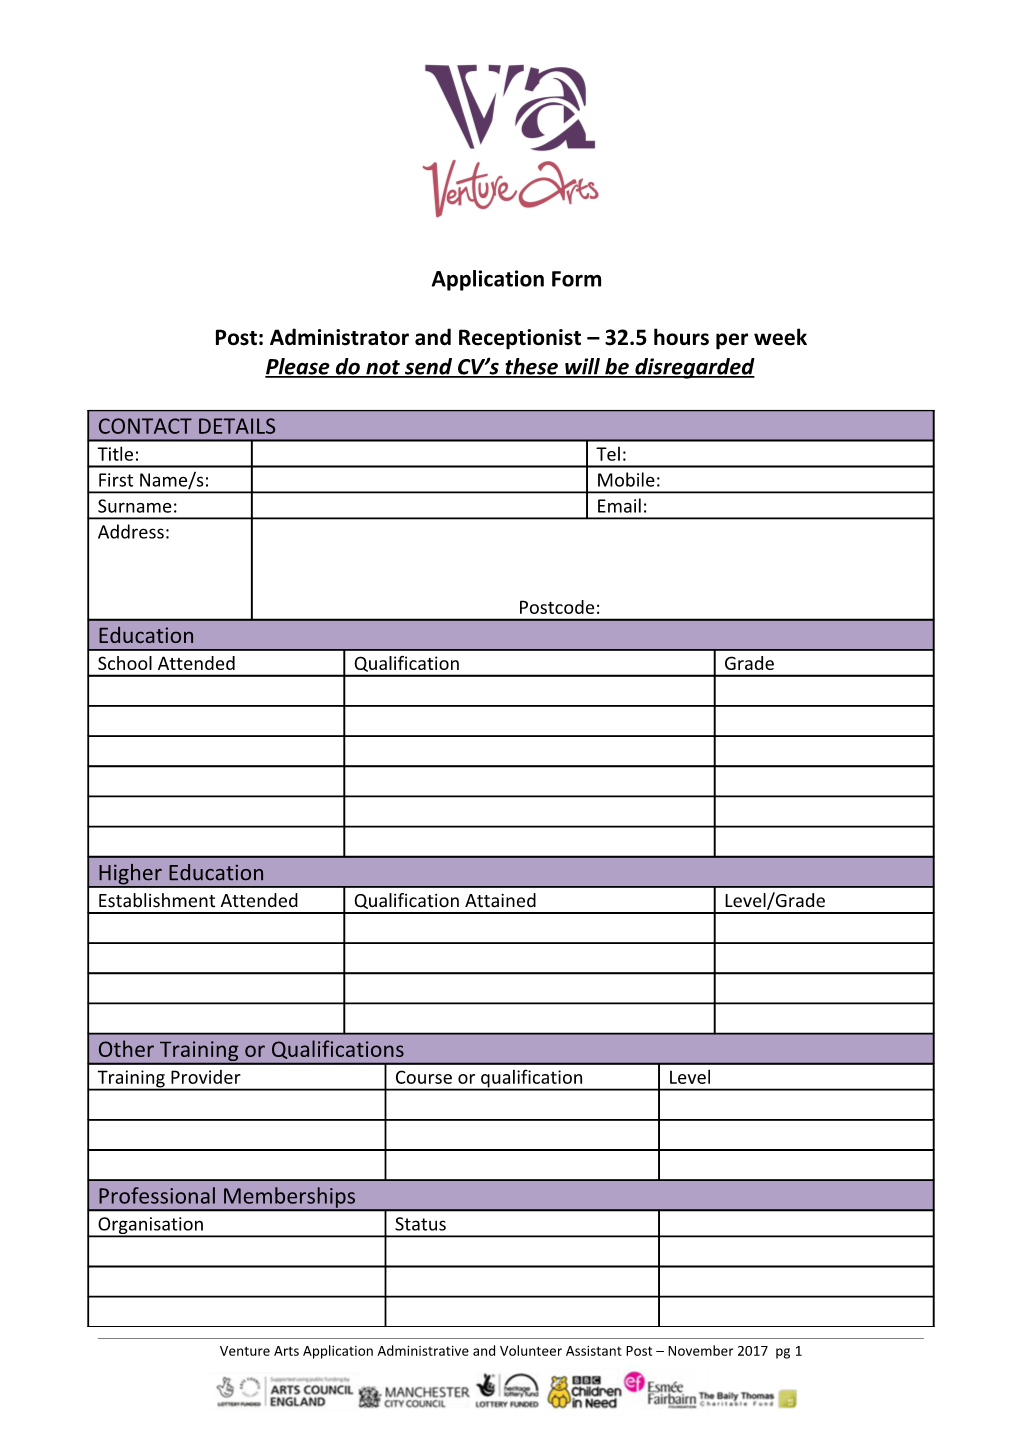 Venture Arts Application Form